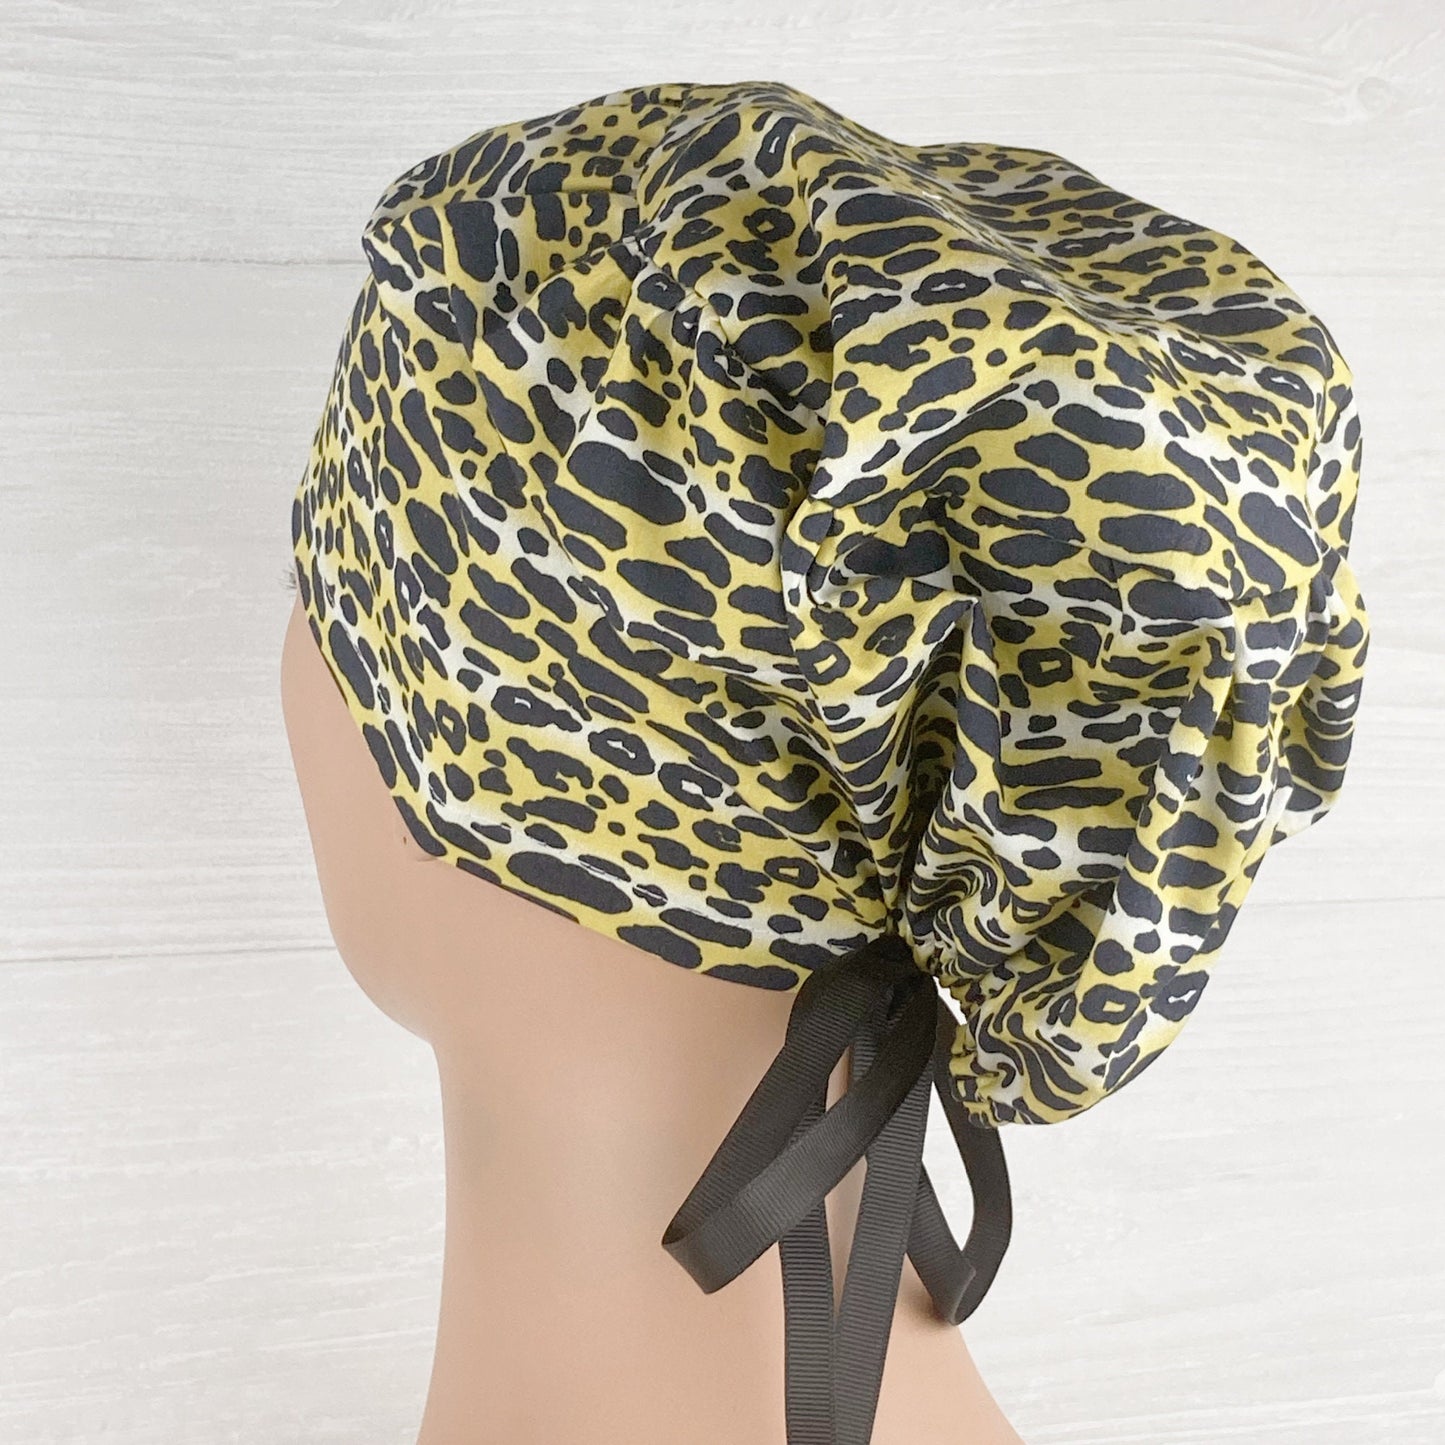 Black and Gold Leopard Women's Tieback Hat